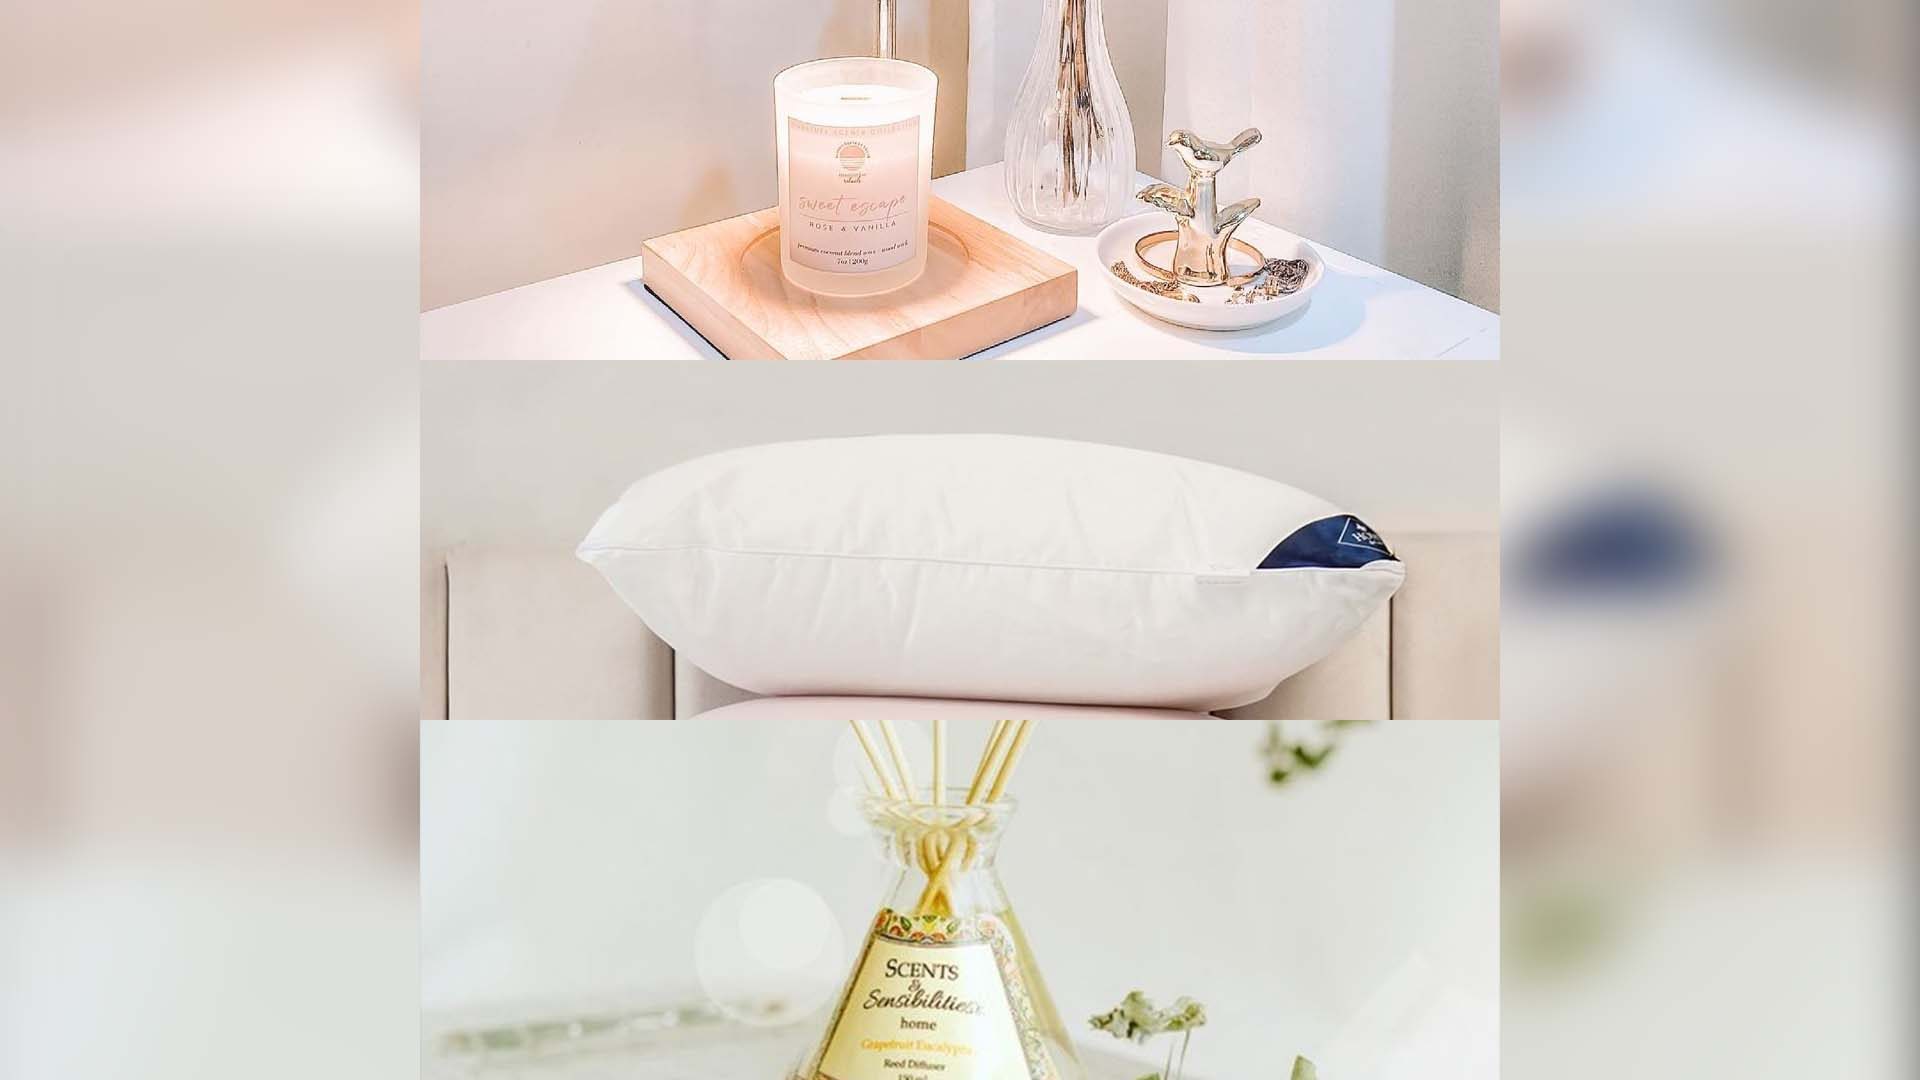 Sosy! ‘Yayamanin’ bedroom upgrades to bring budget luxury into your life